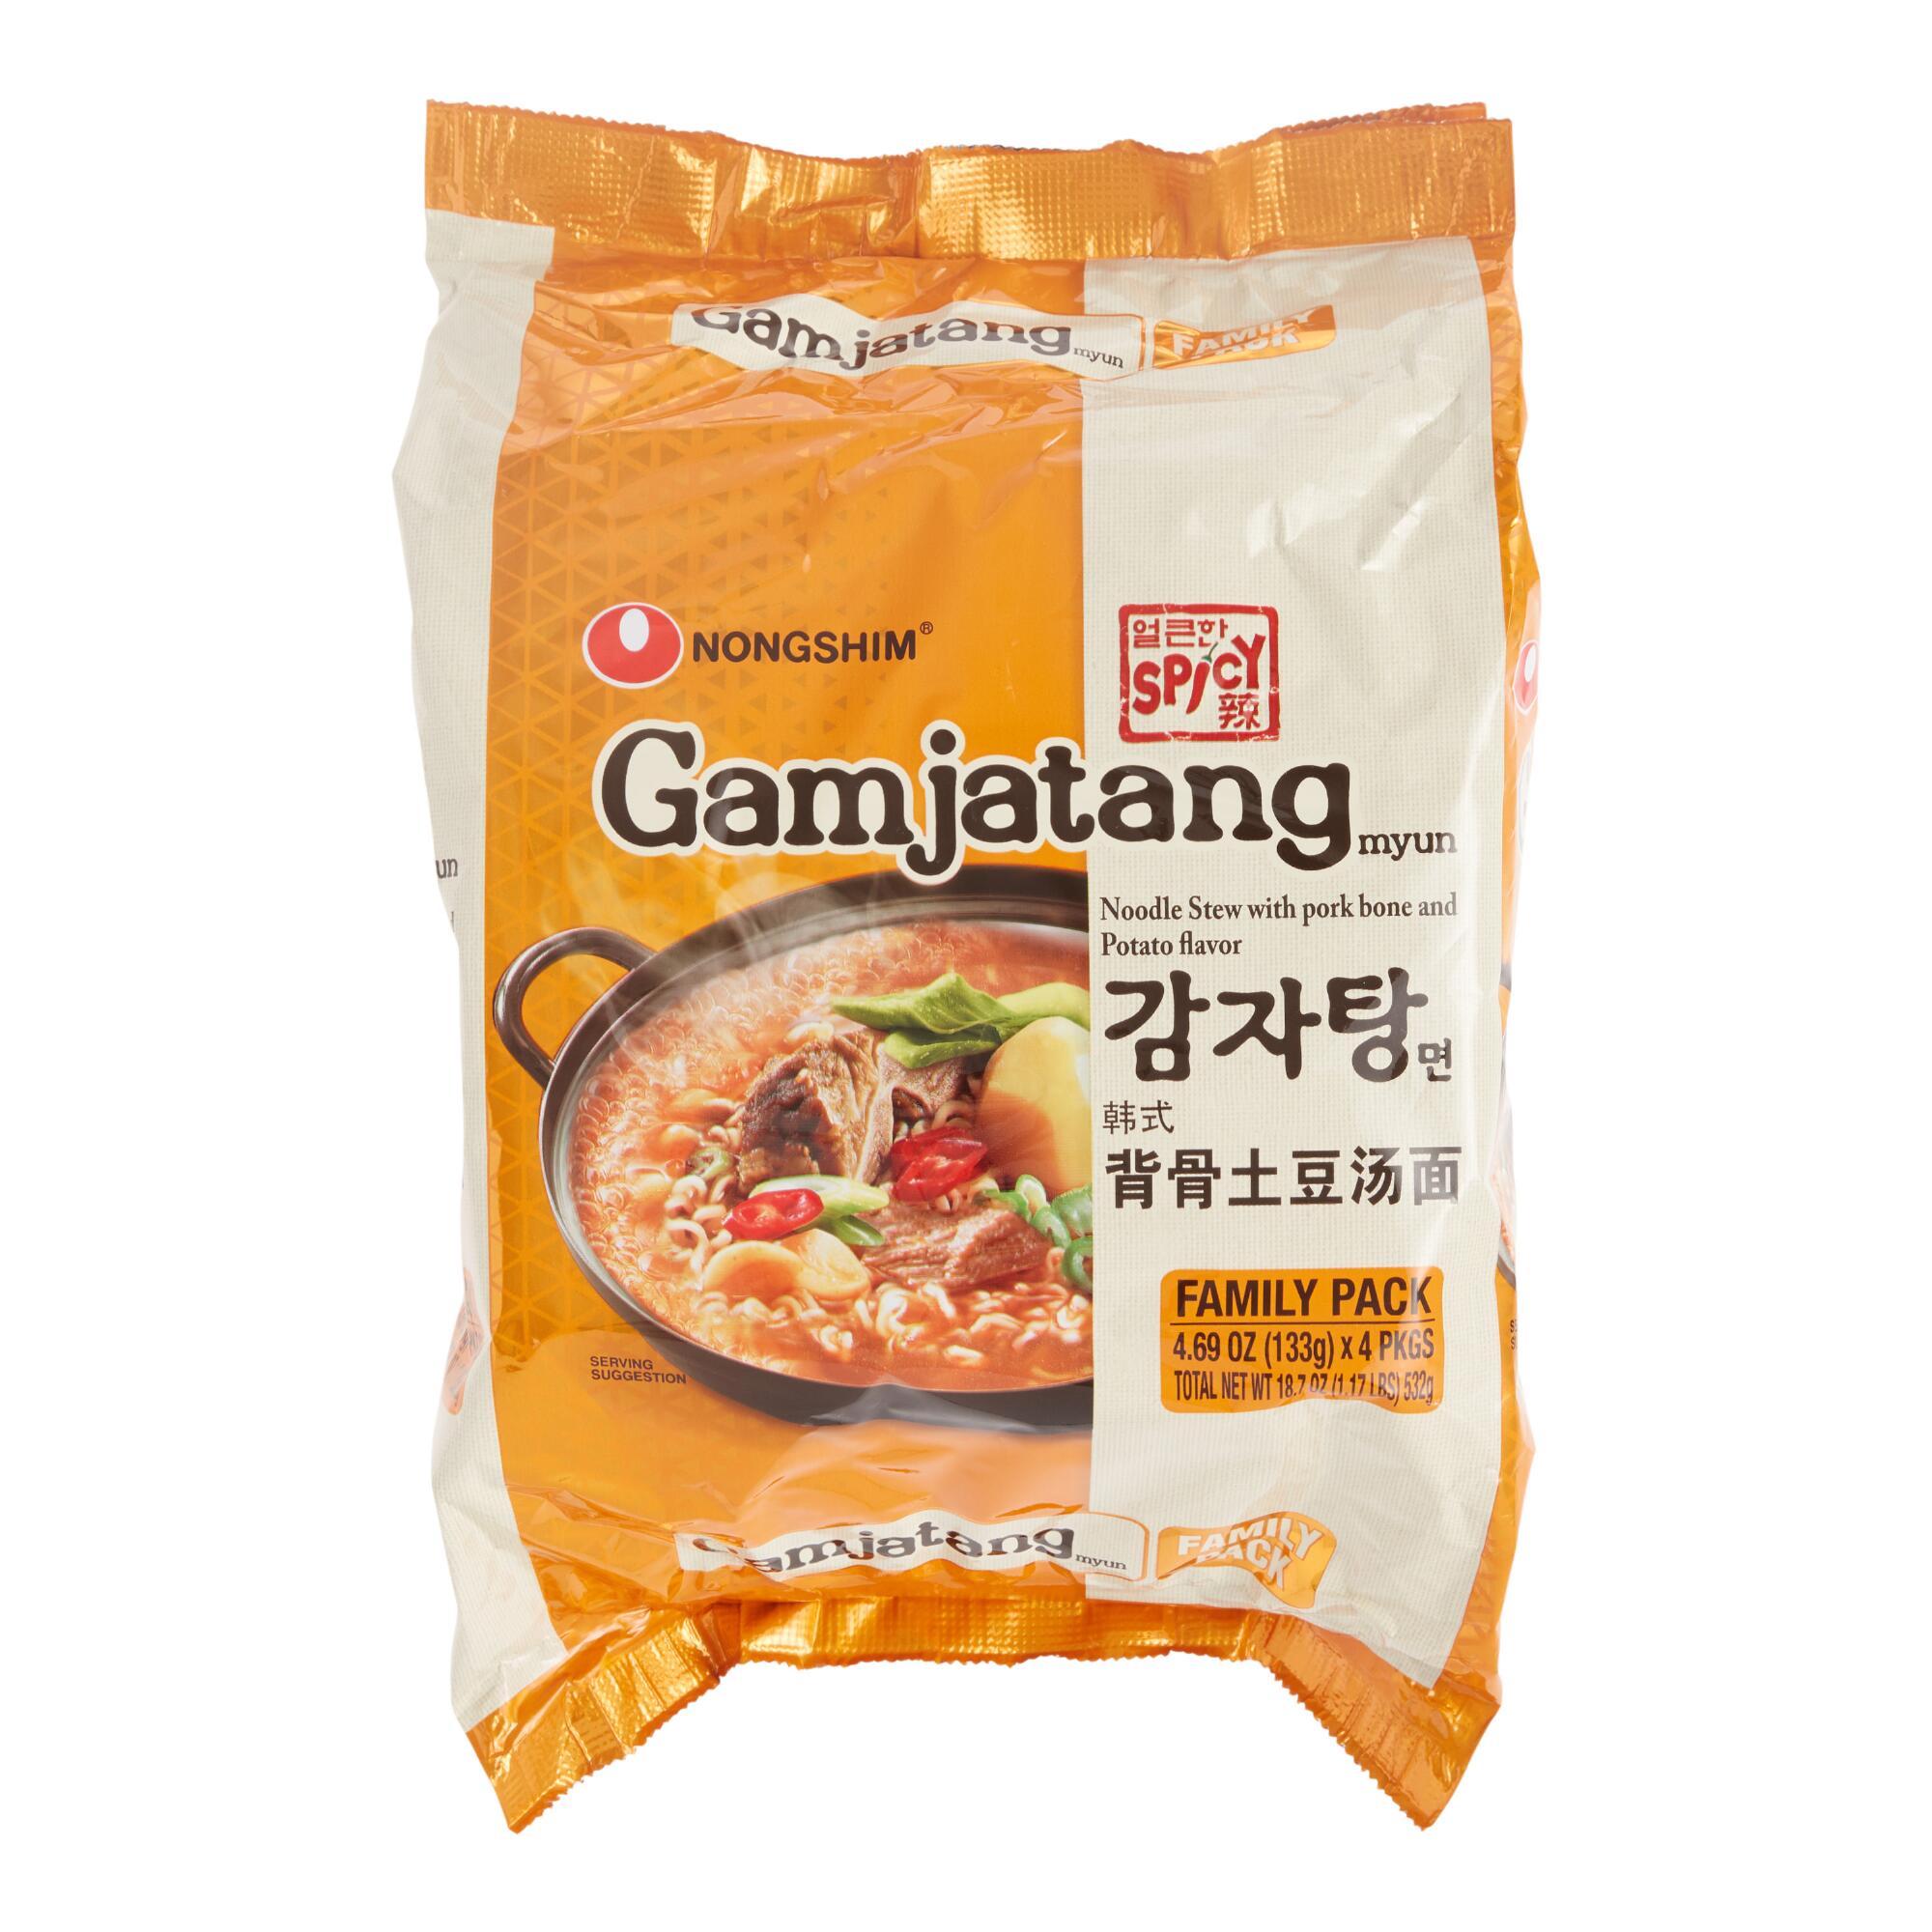 Nongshim Gamjatang Pork Bone Noodle Soup 4 Pack by World Market